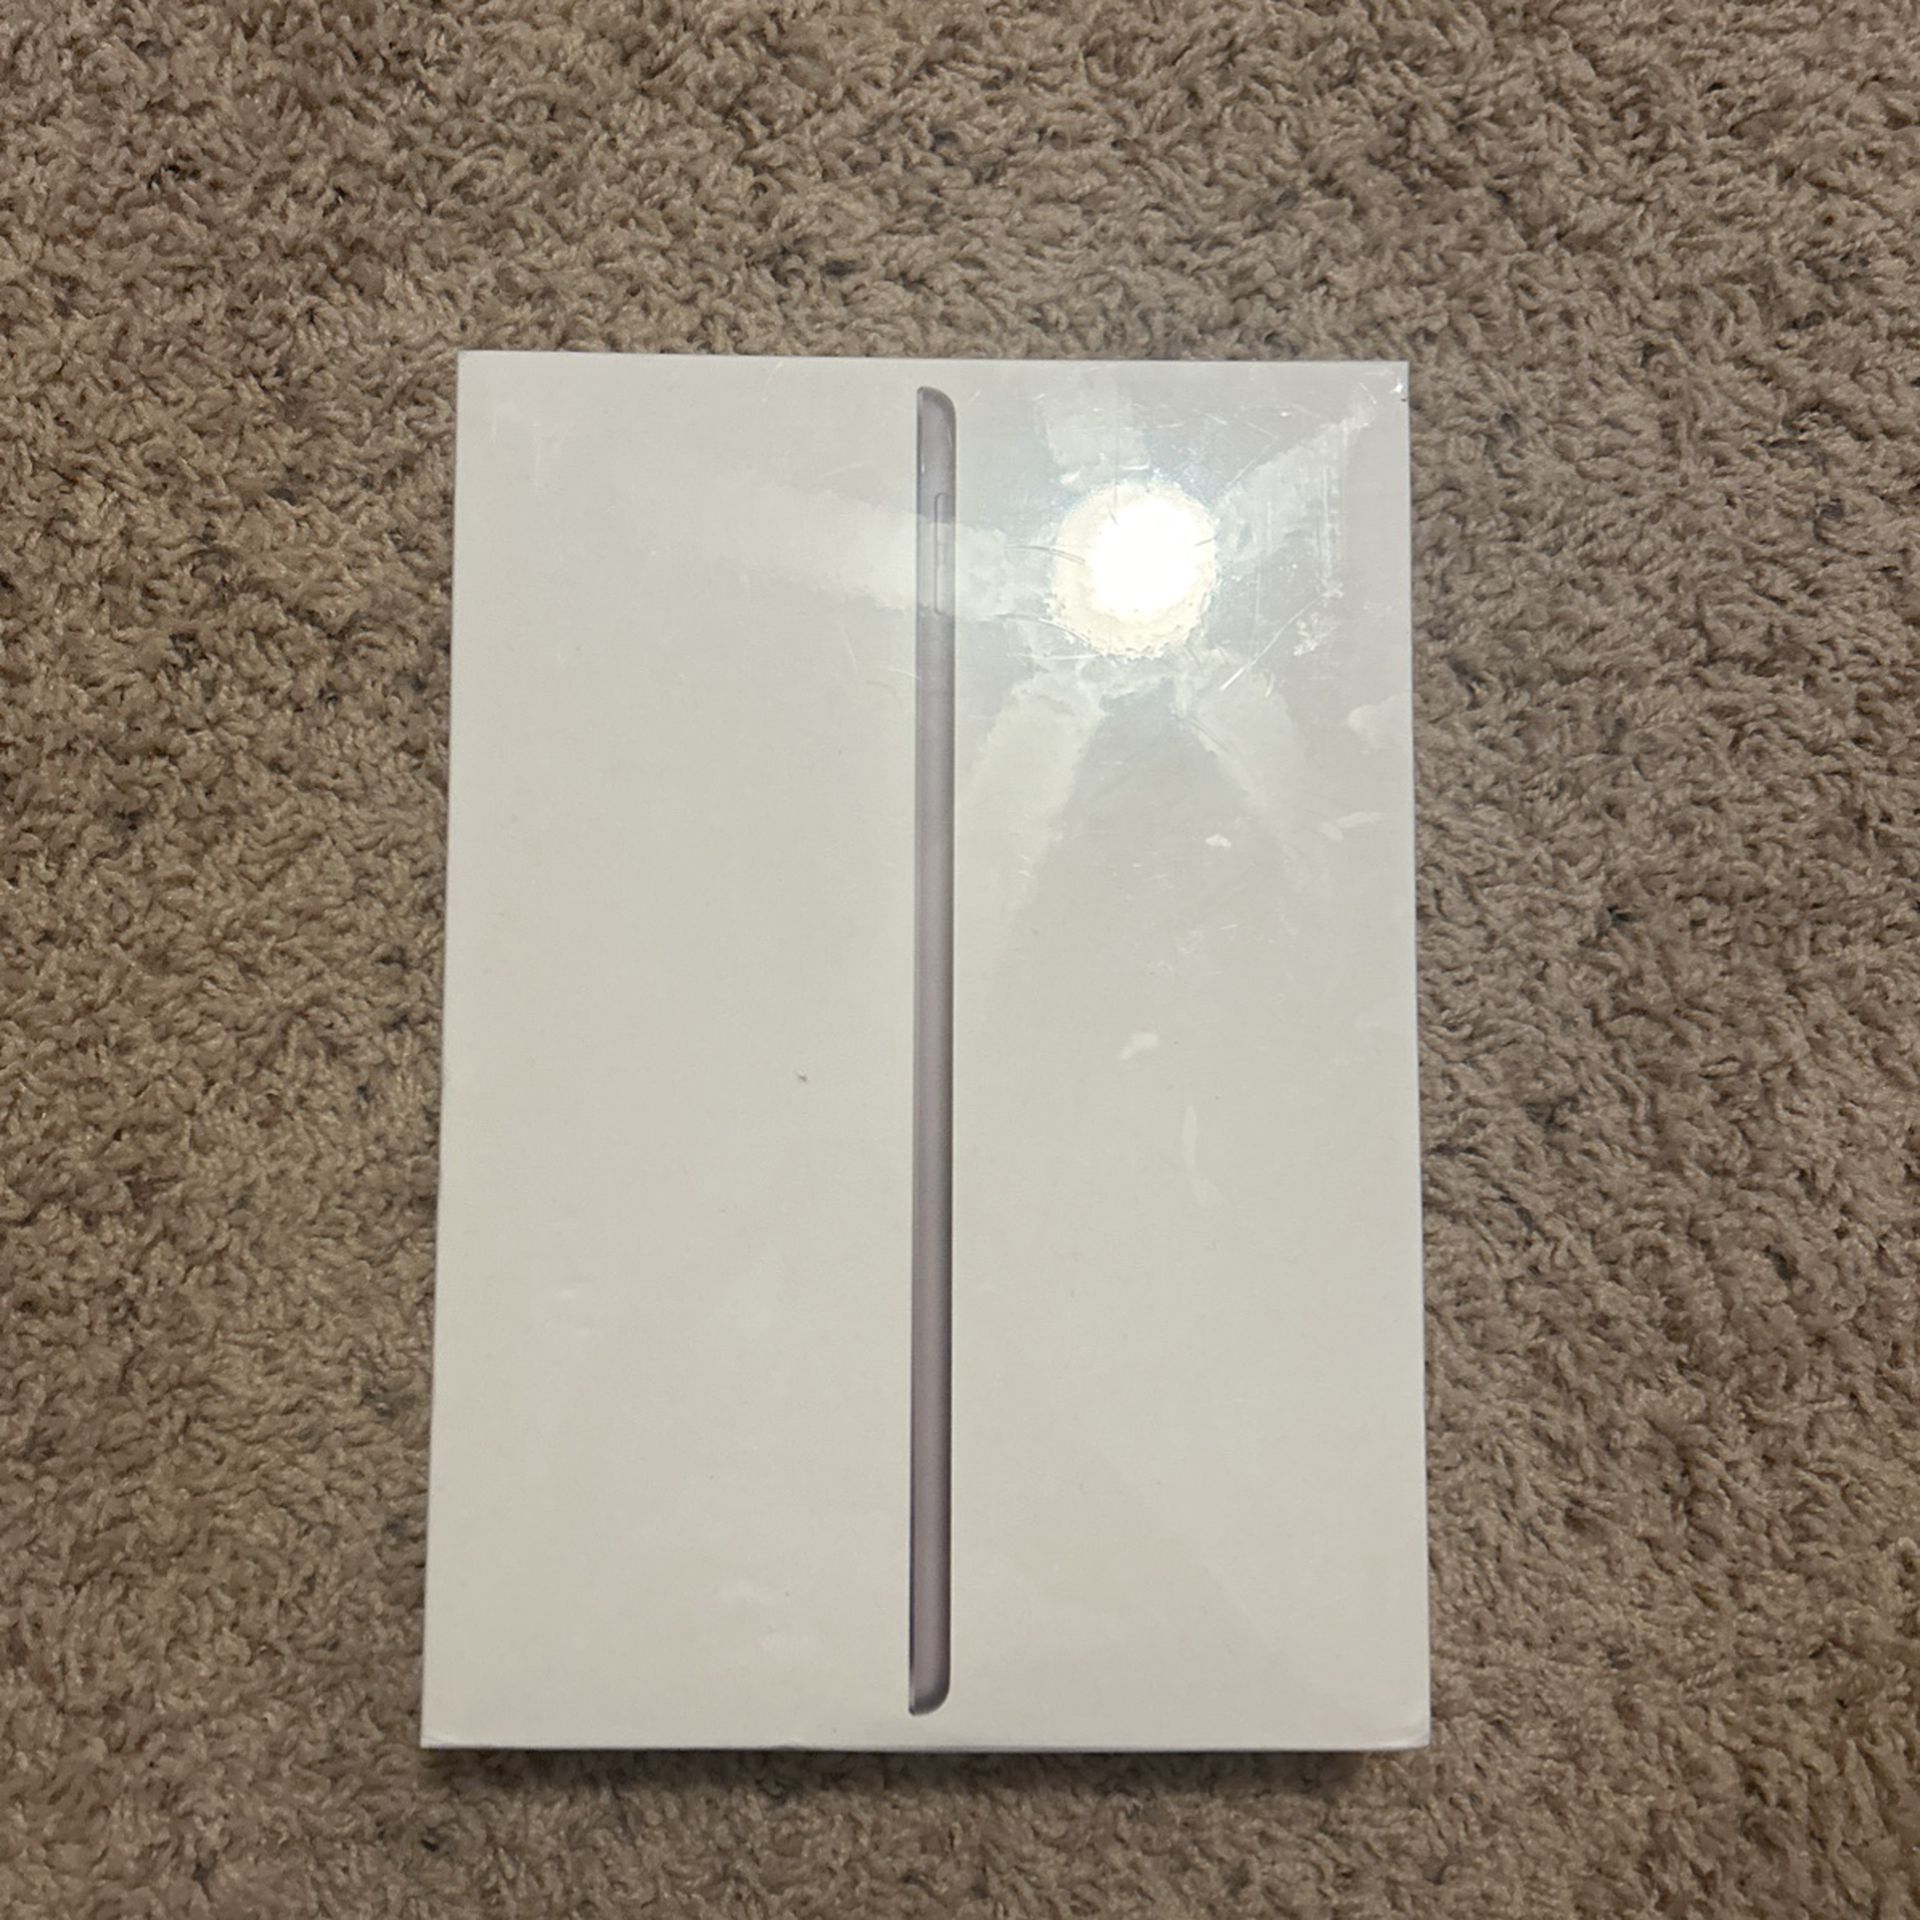 iPad 9th Generation (64gb)